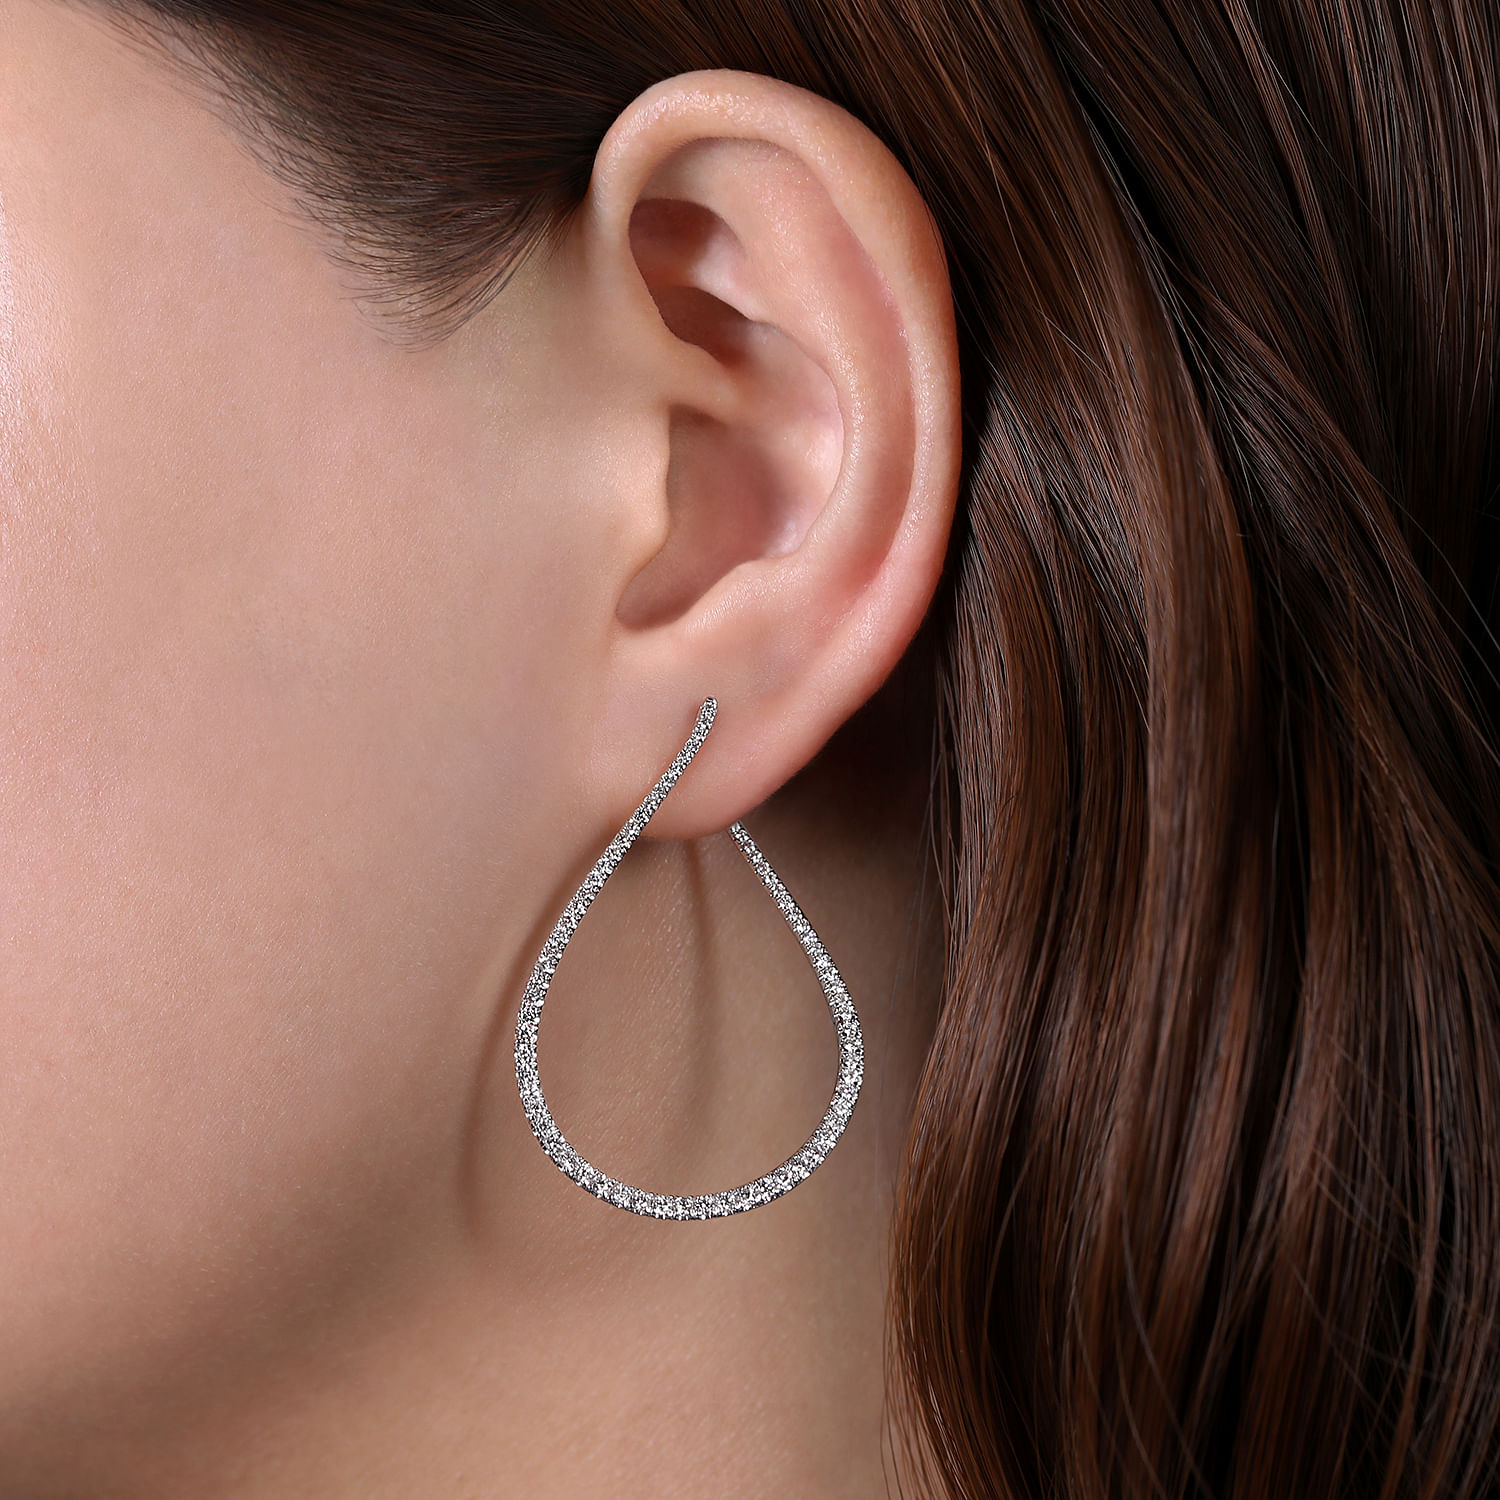 14k White Gold 45mm Intricate Pear Shaped Diamond Hoop Earrings